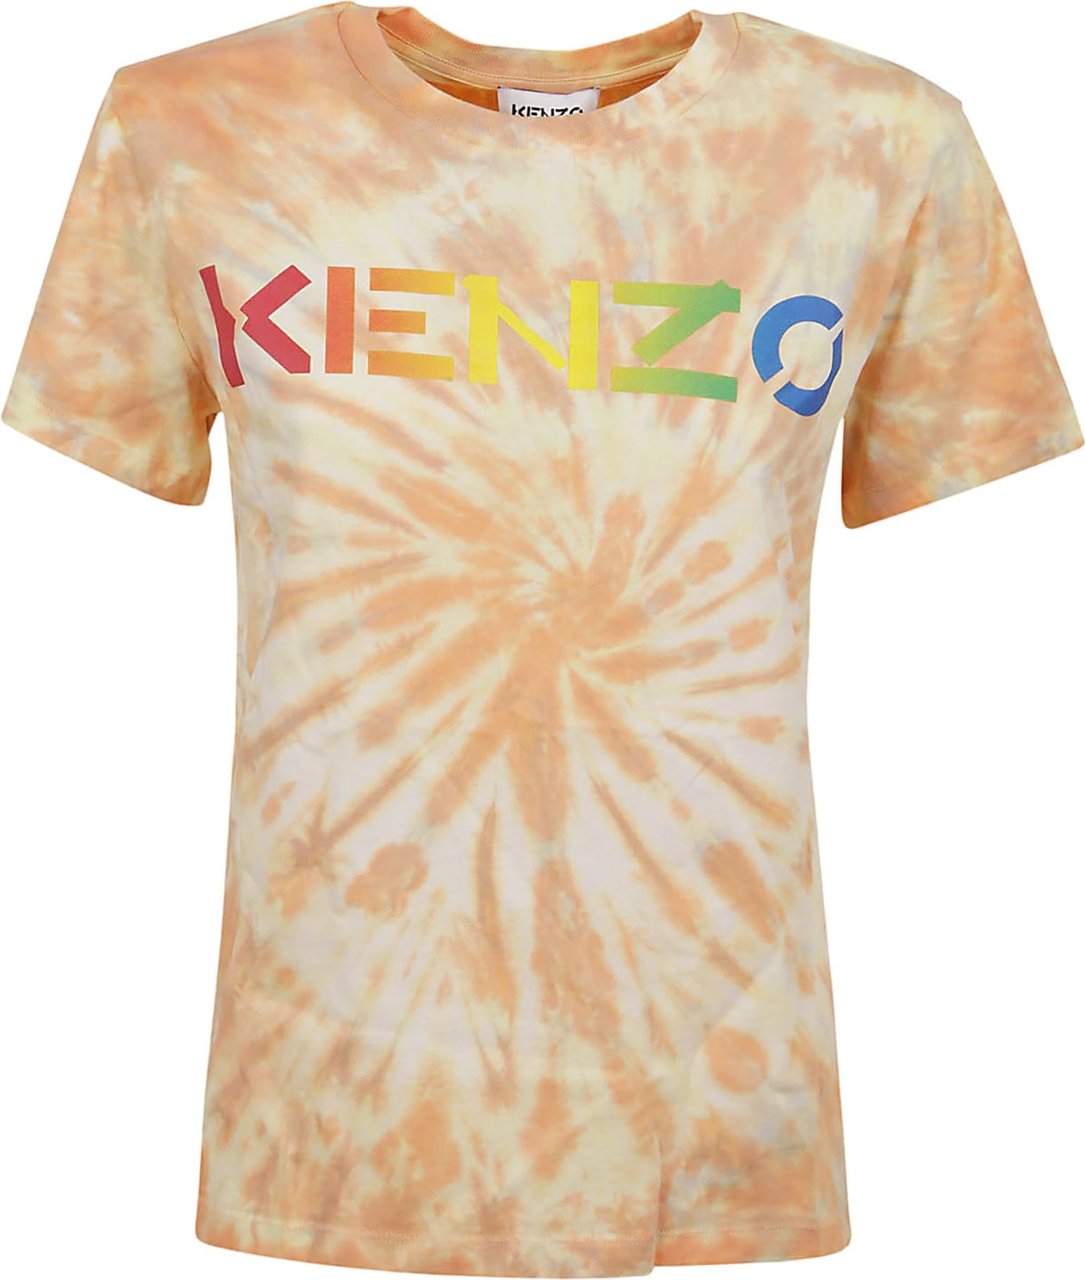 Kenzo Logo Classic T-Shirt Beige